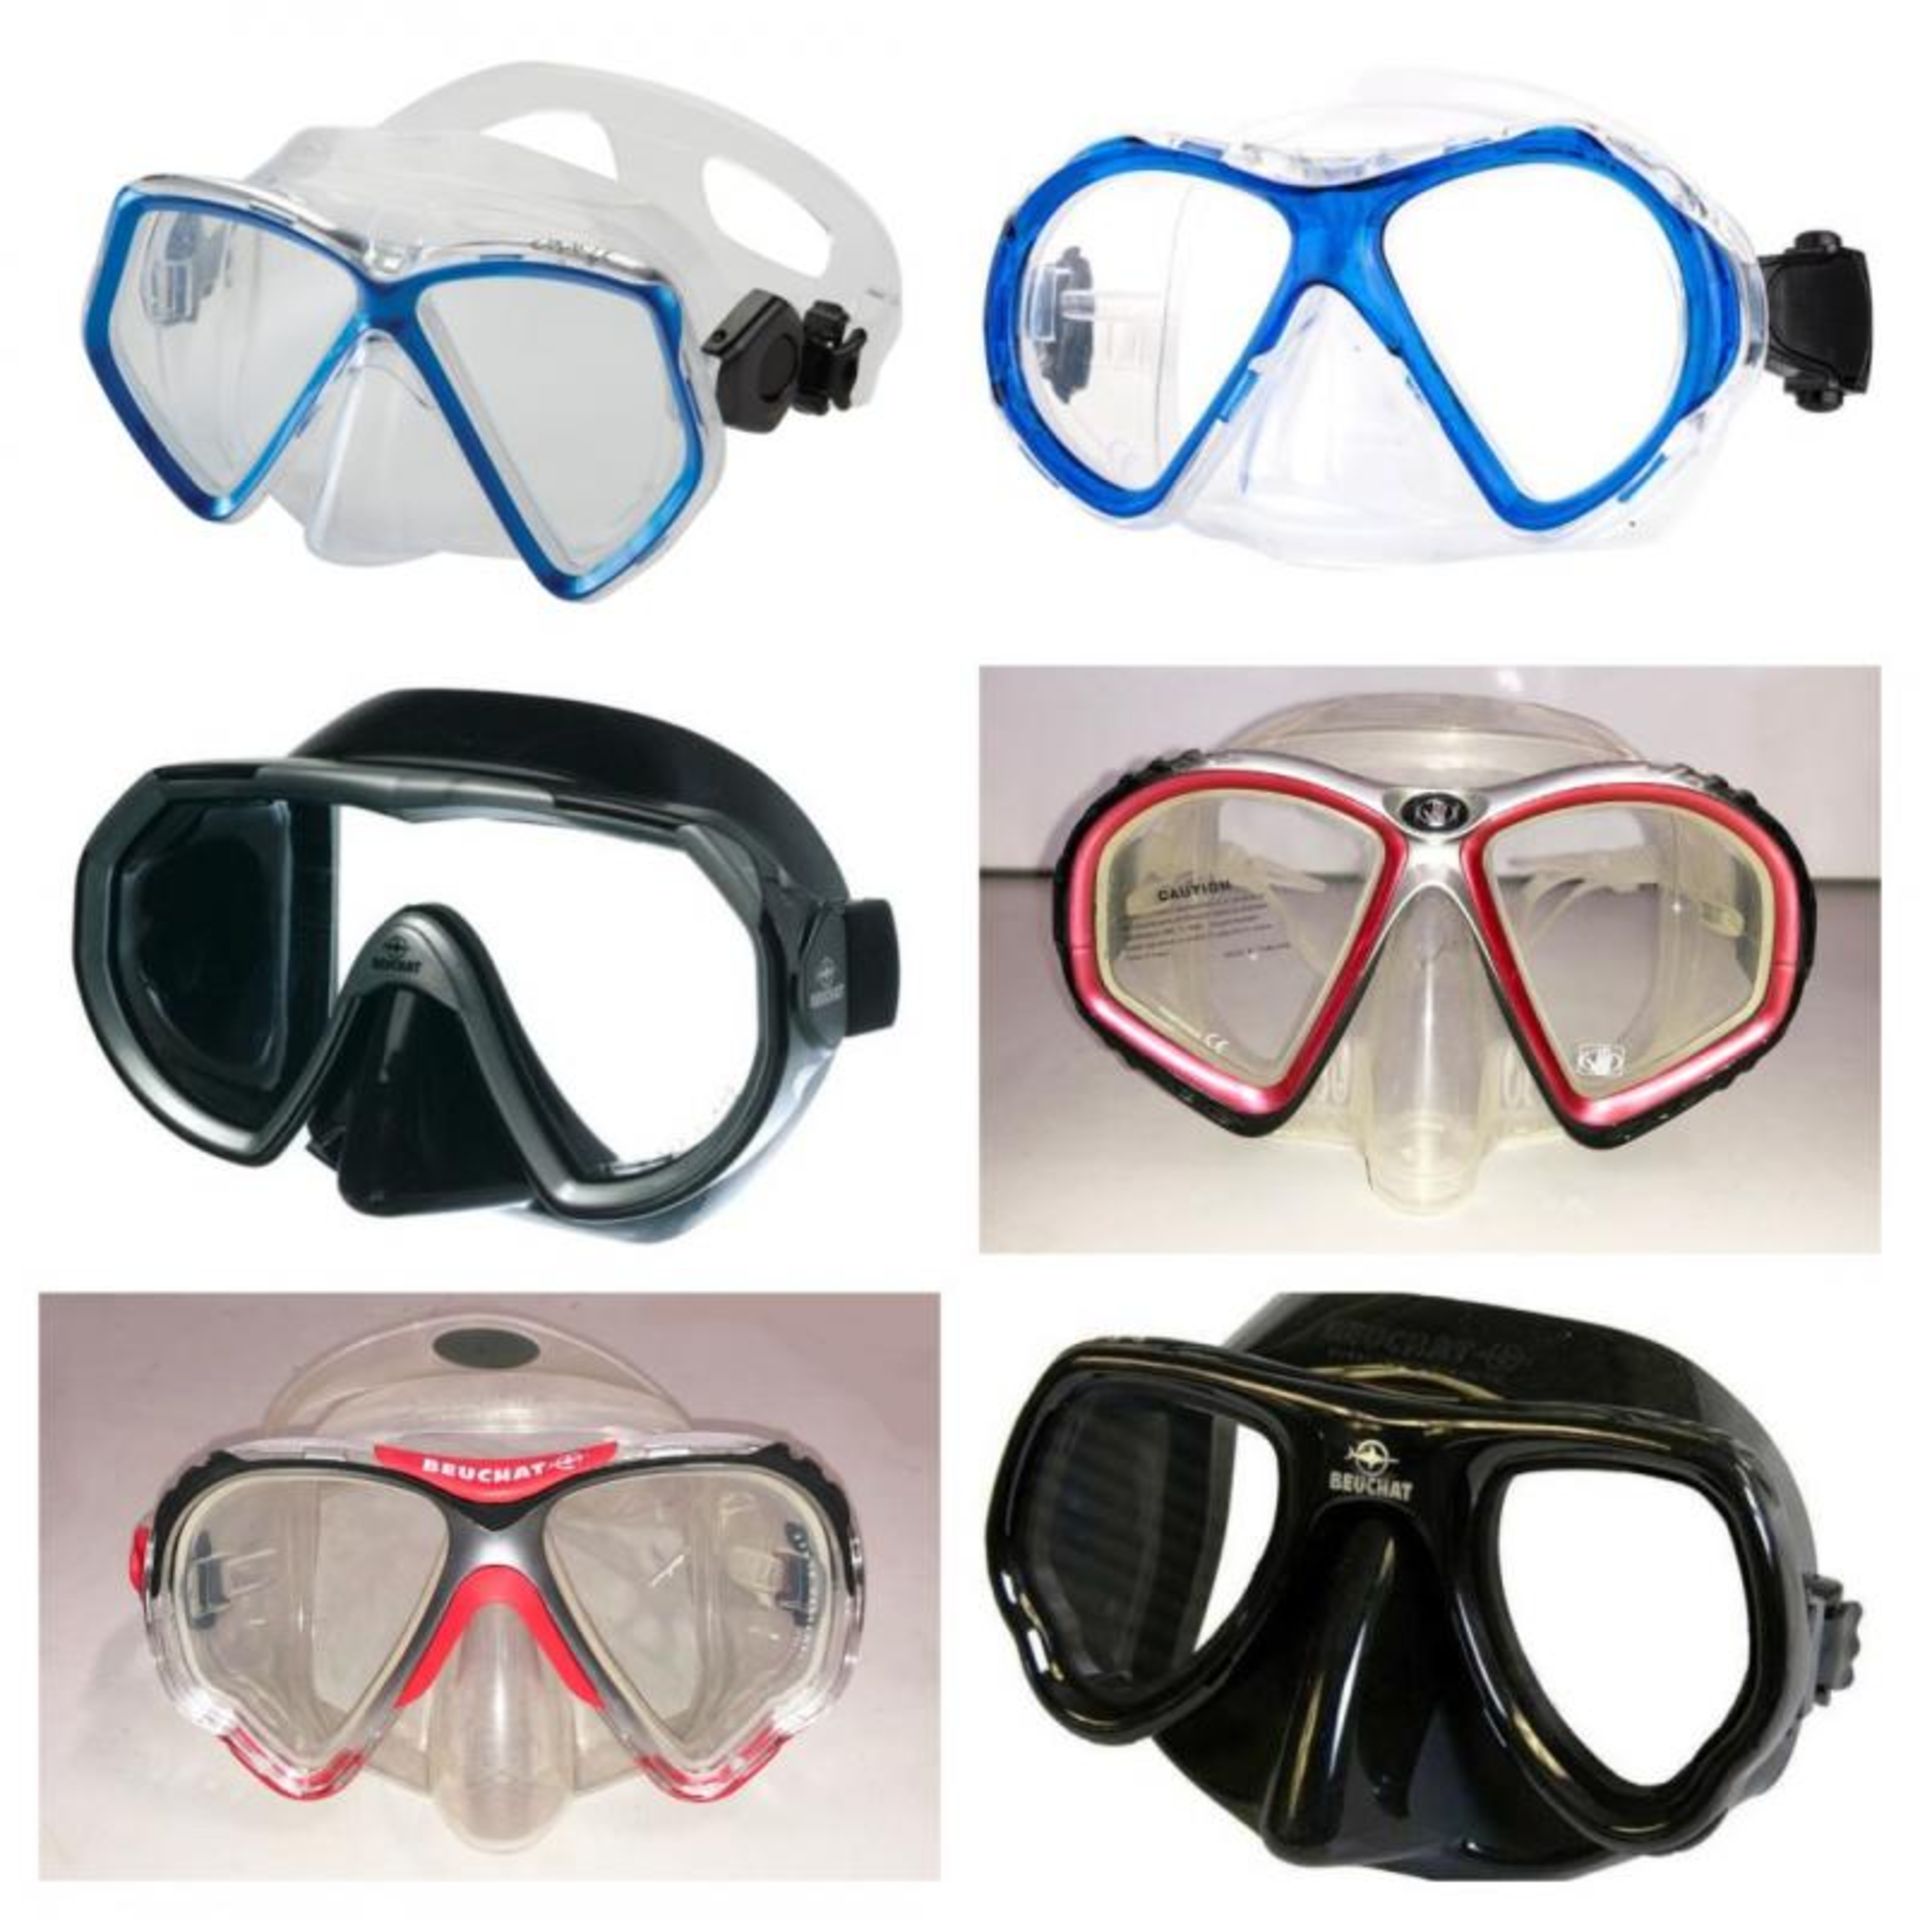 6 x New Branded Diving Masks - Ref: NS391, NS392, NS393, NS394, NS395, NS396 - CL349 - Altrincham WA